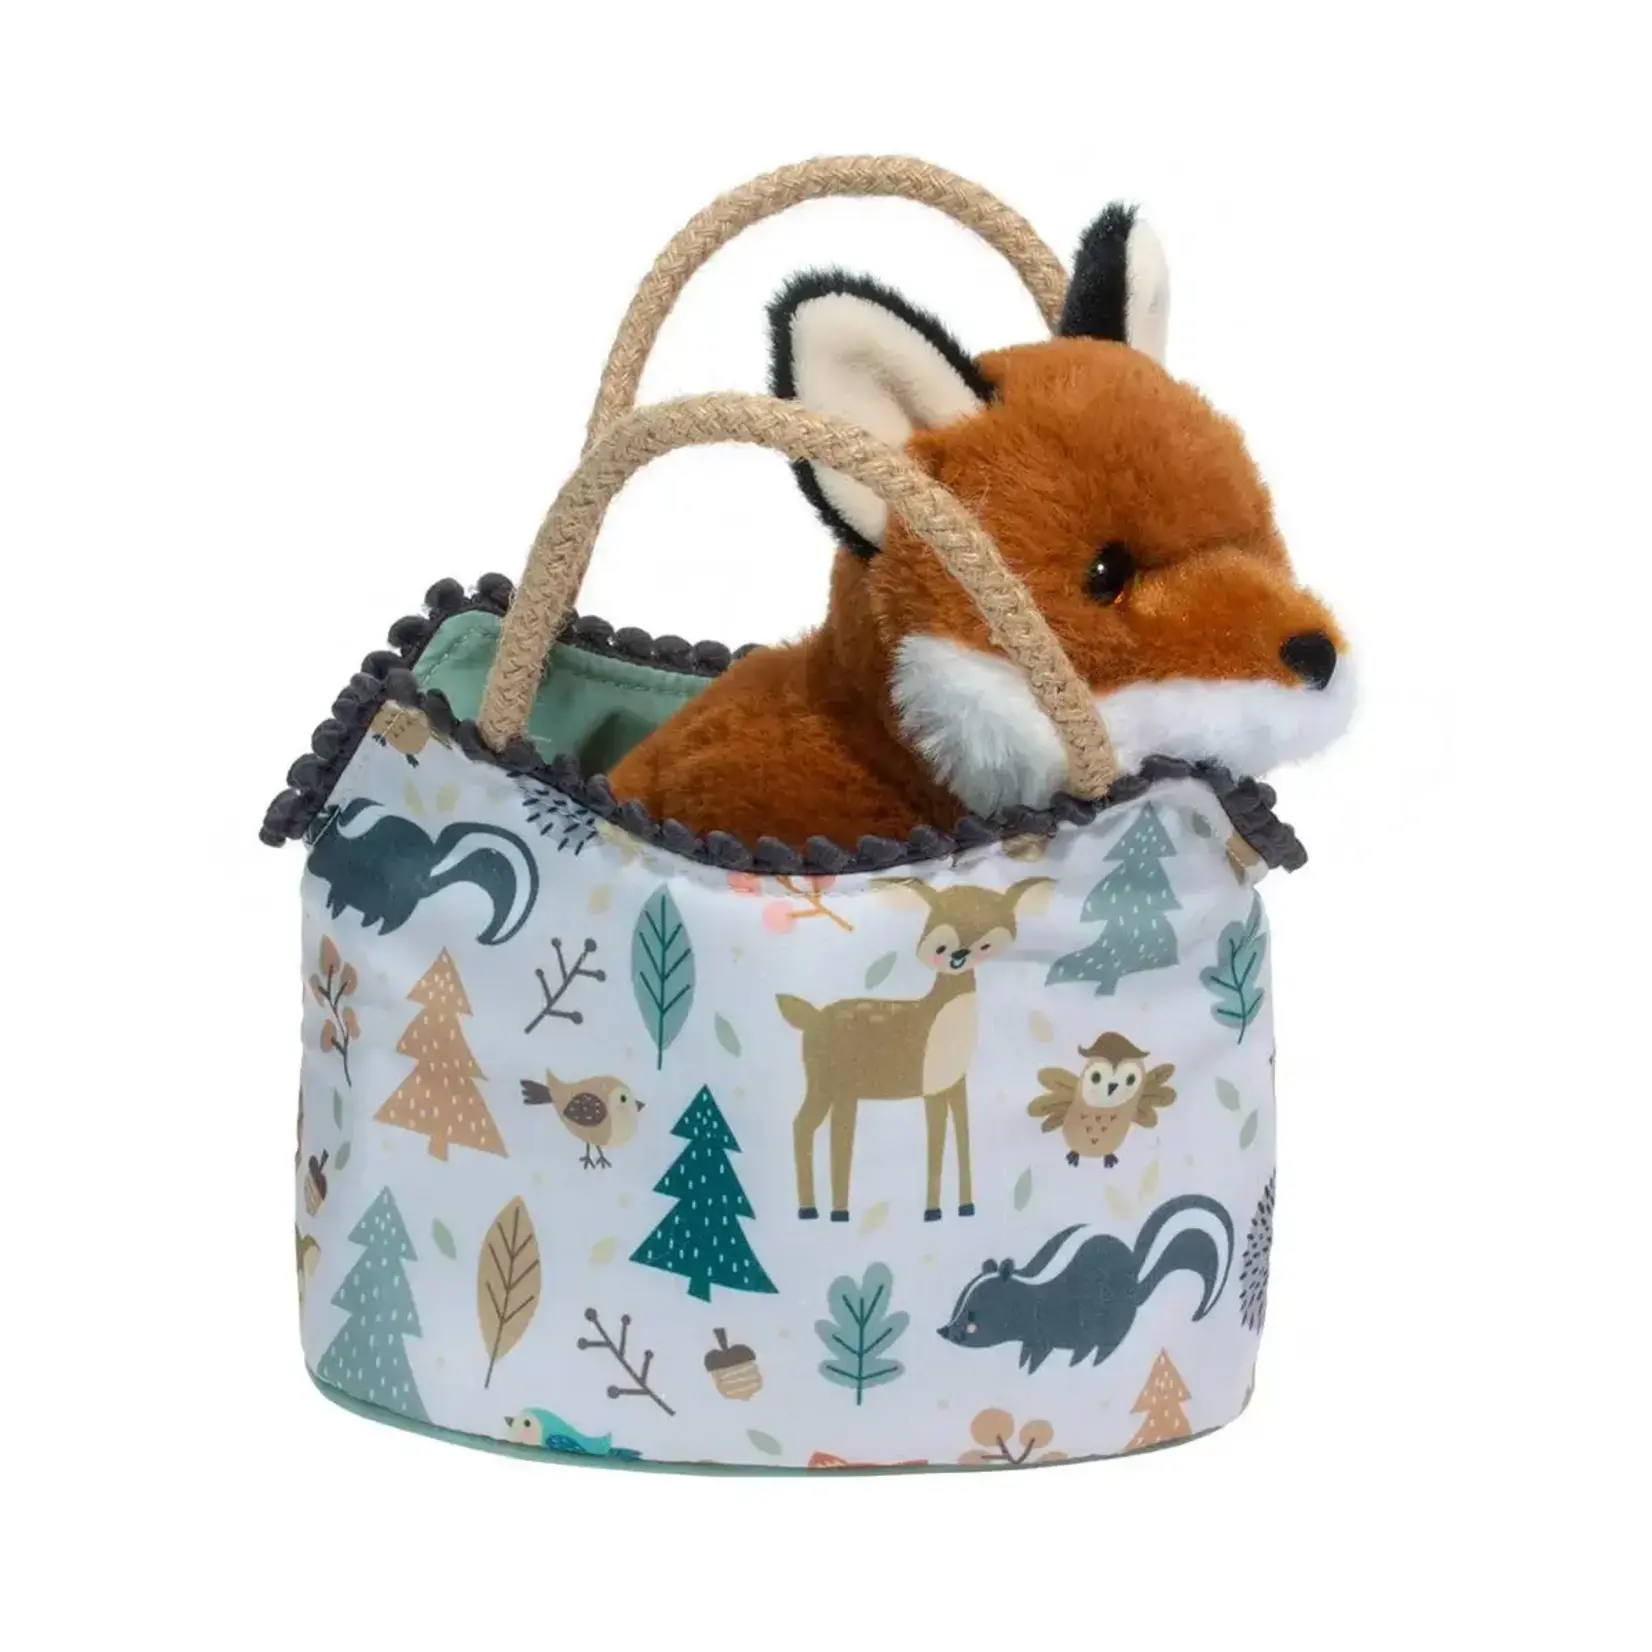 Douglas Toys Magical Forest Sassy Sak with Fox